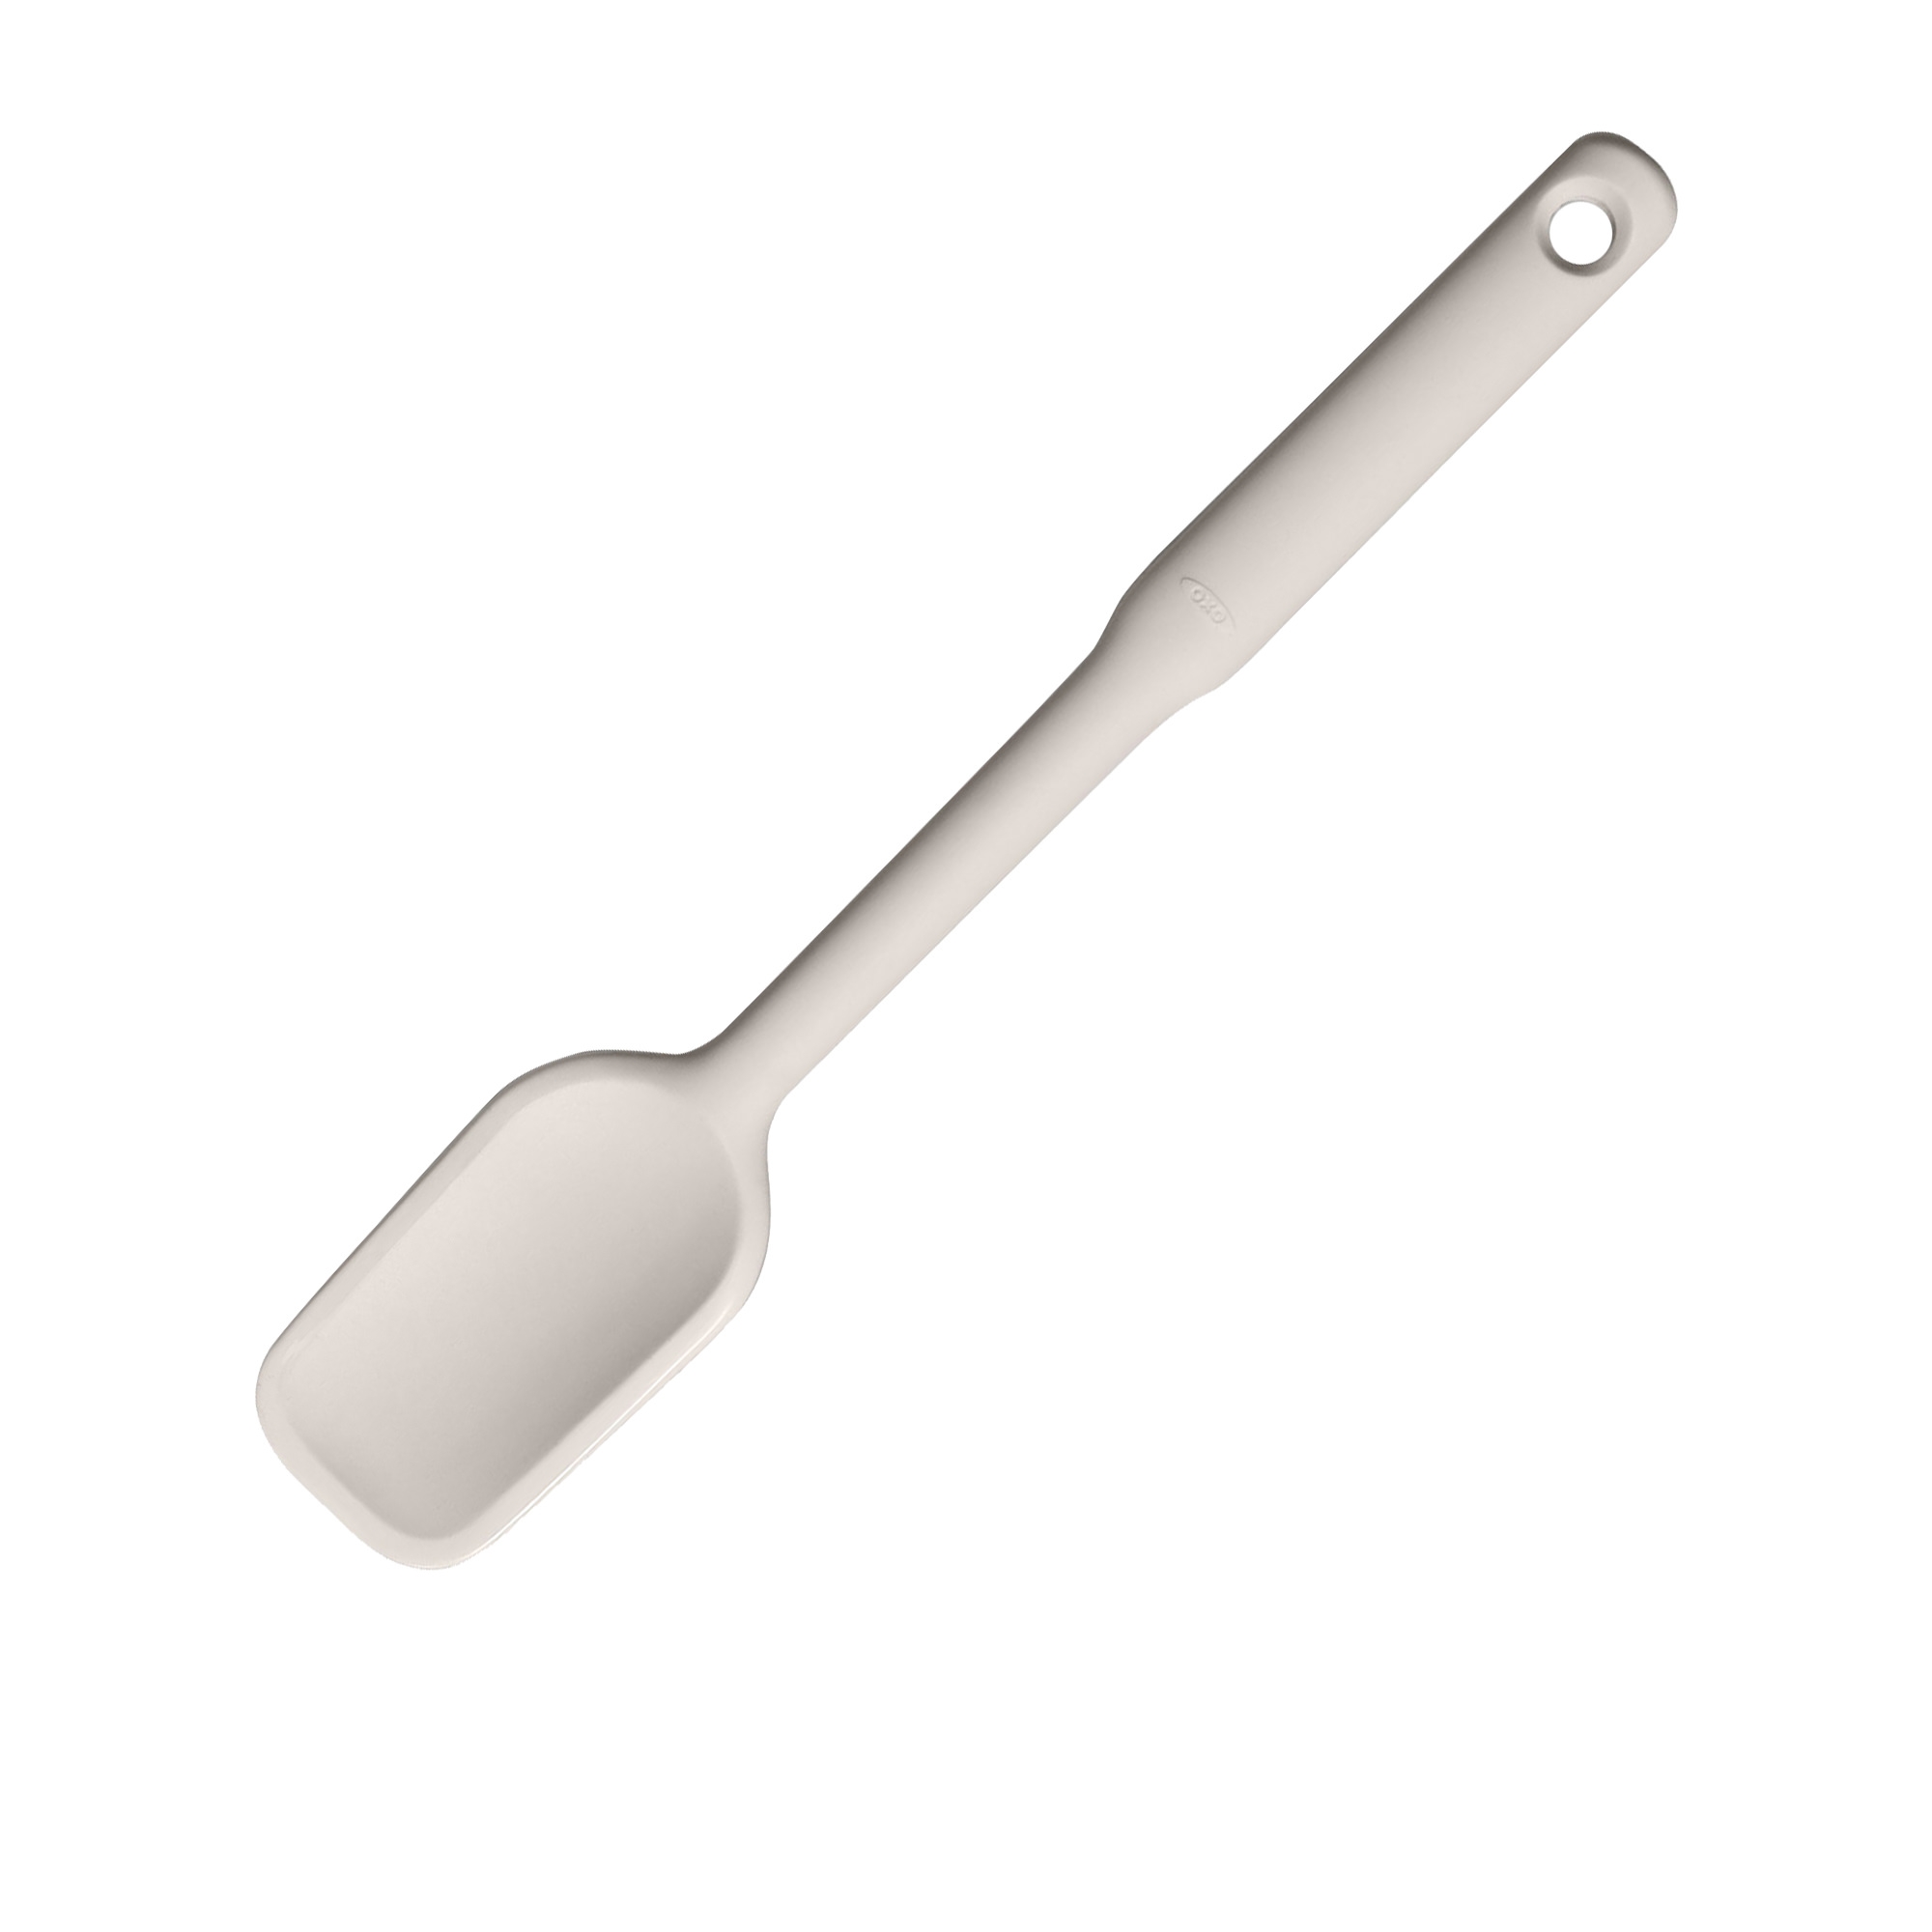 OXO Good Grips Silicone Spoon Spatula Image 1